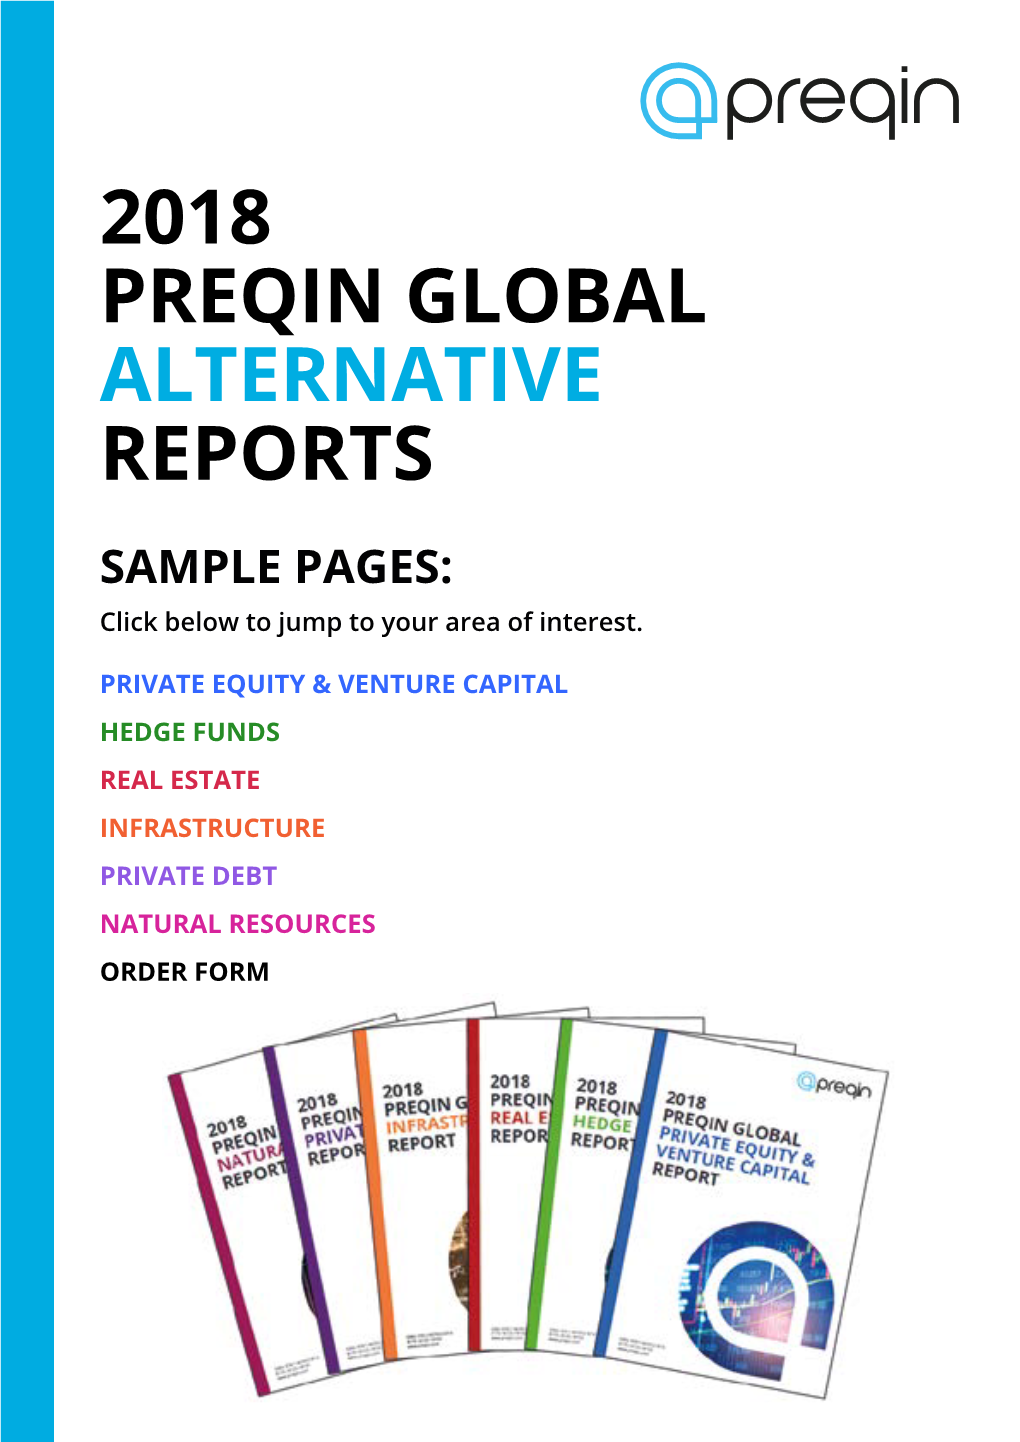 2018 Preqin Global Alternative Reports